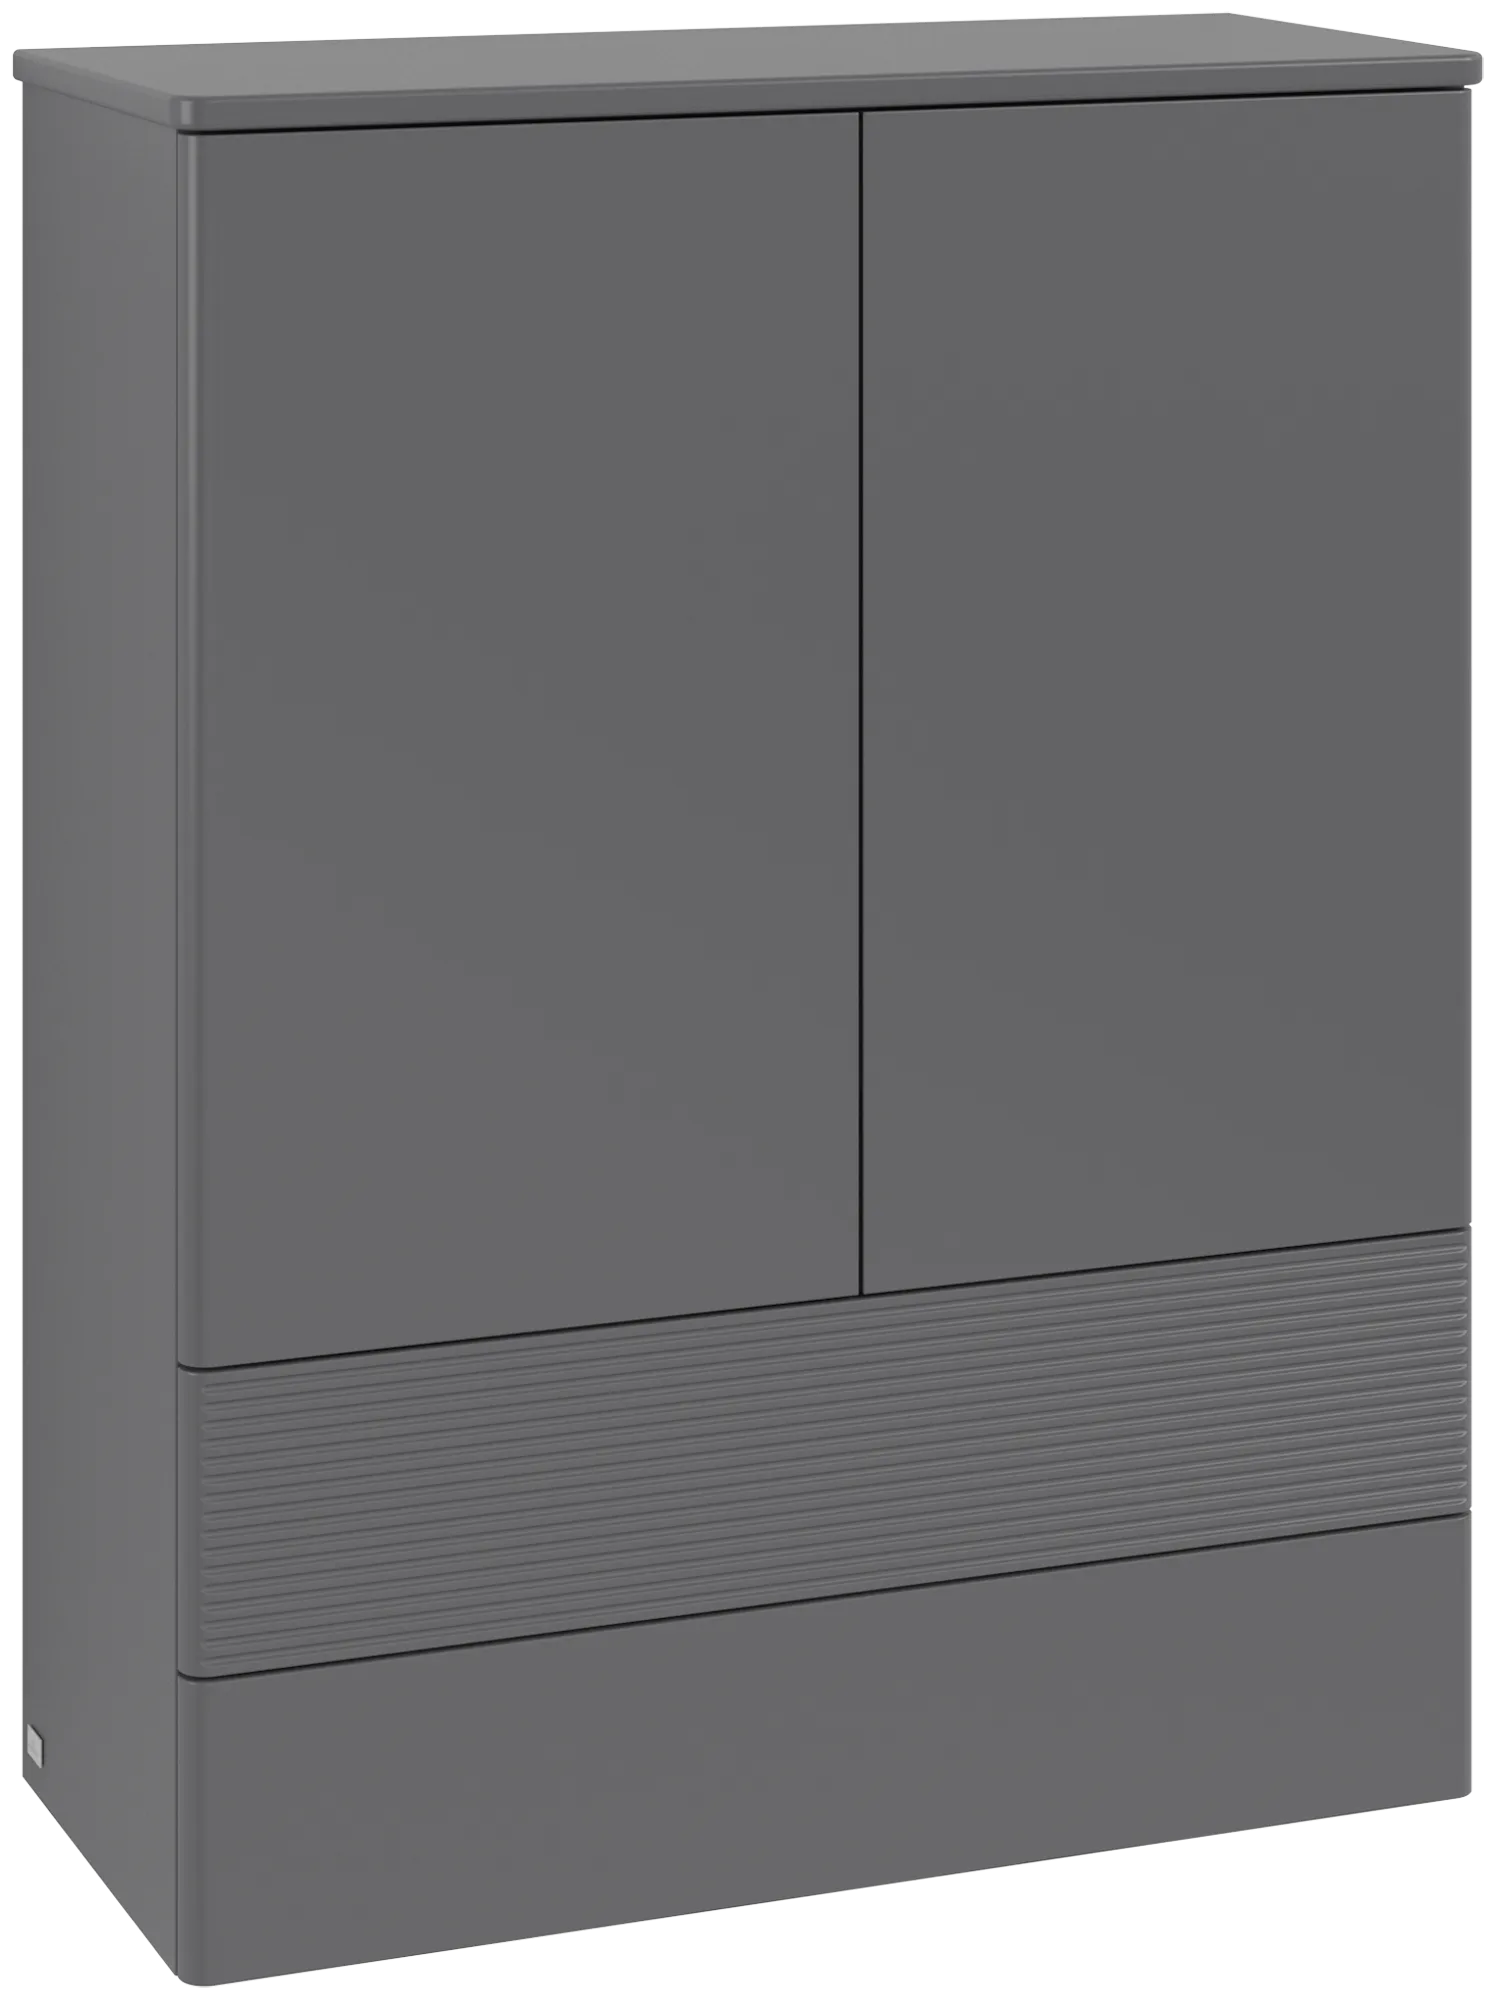 Picture of VILLEROY BOCH Antao Highboard, 2 doors, 814 x 1039 x 356 mm, Front with grain texture, Anthracite Matt Lacquer / Anthracite Matt Lacquer #K47100GK